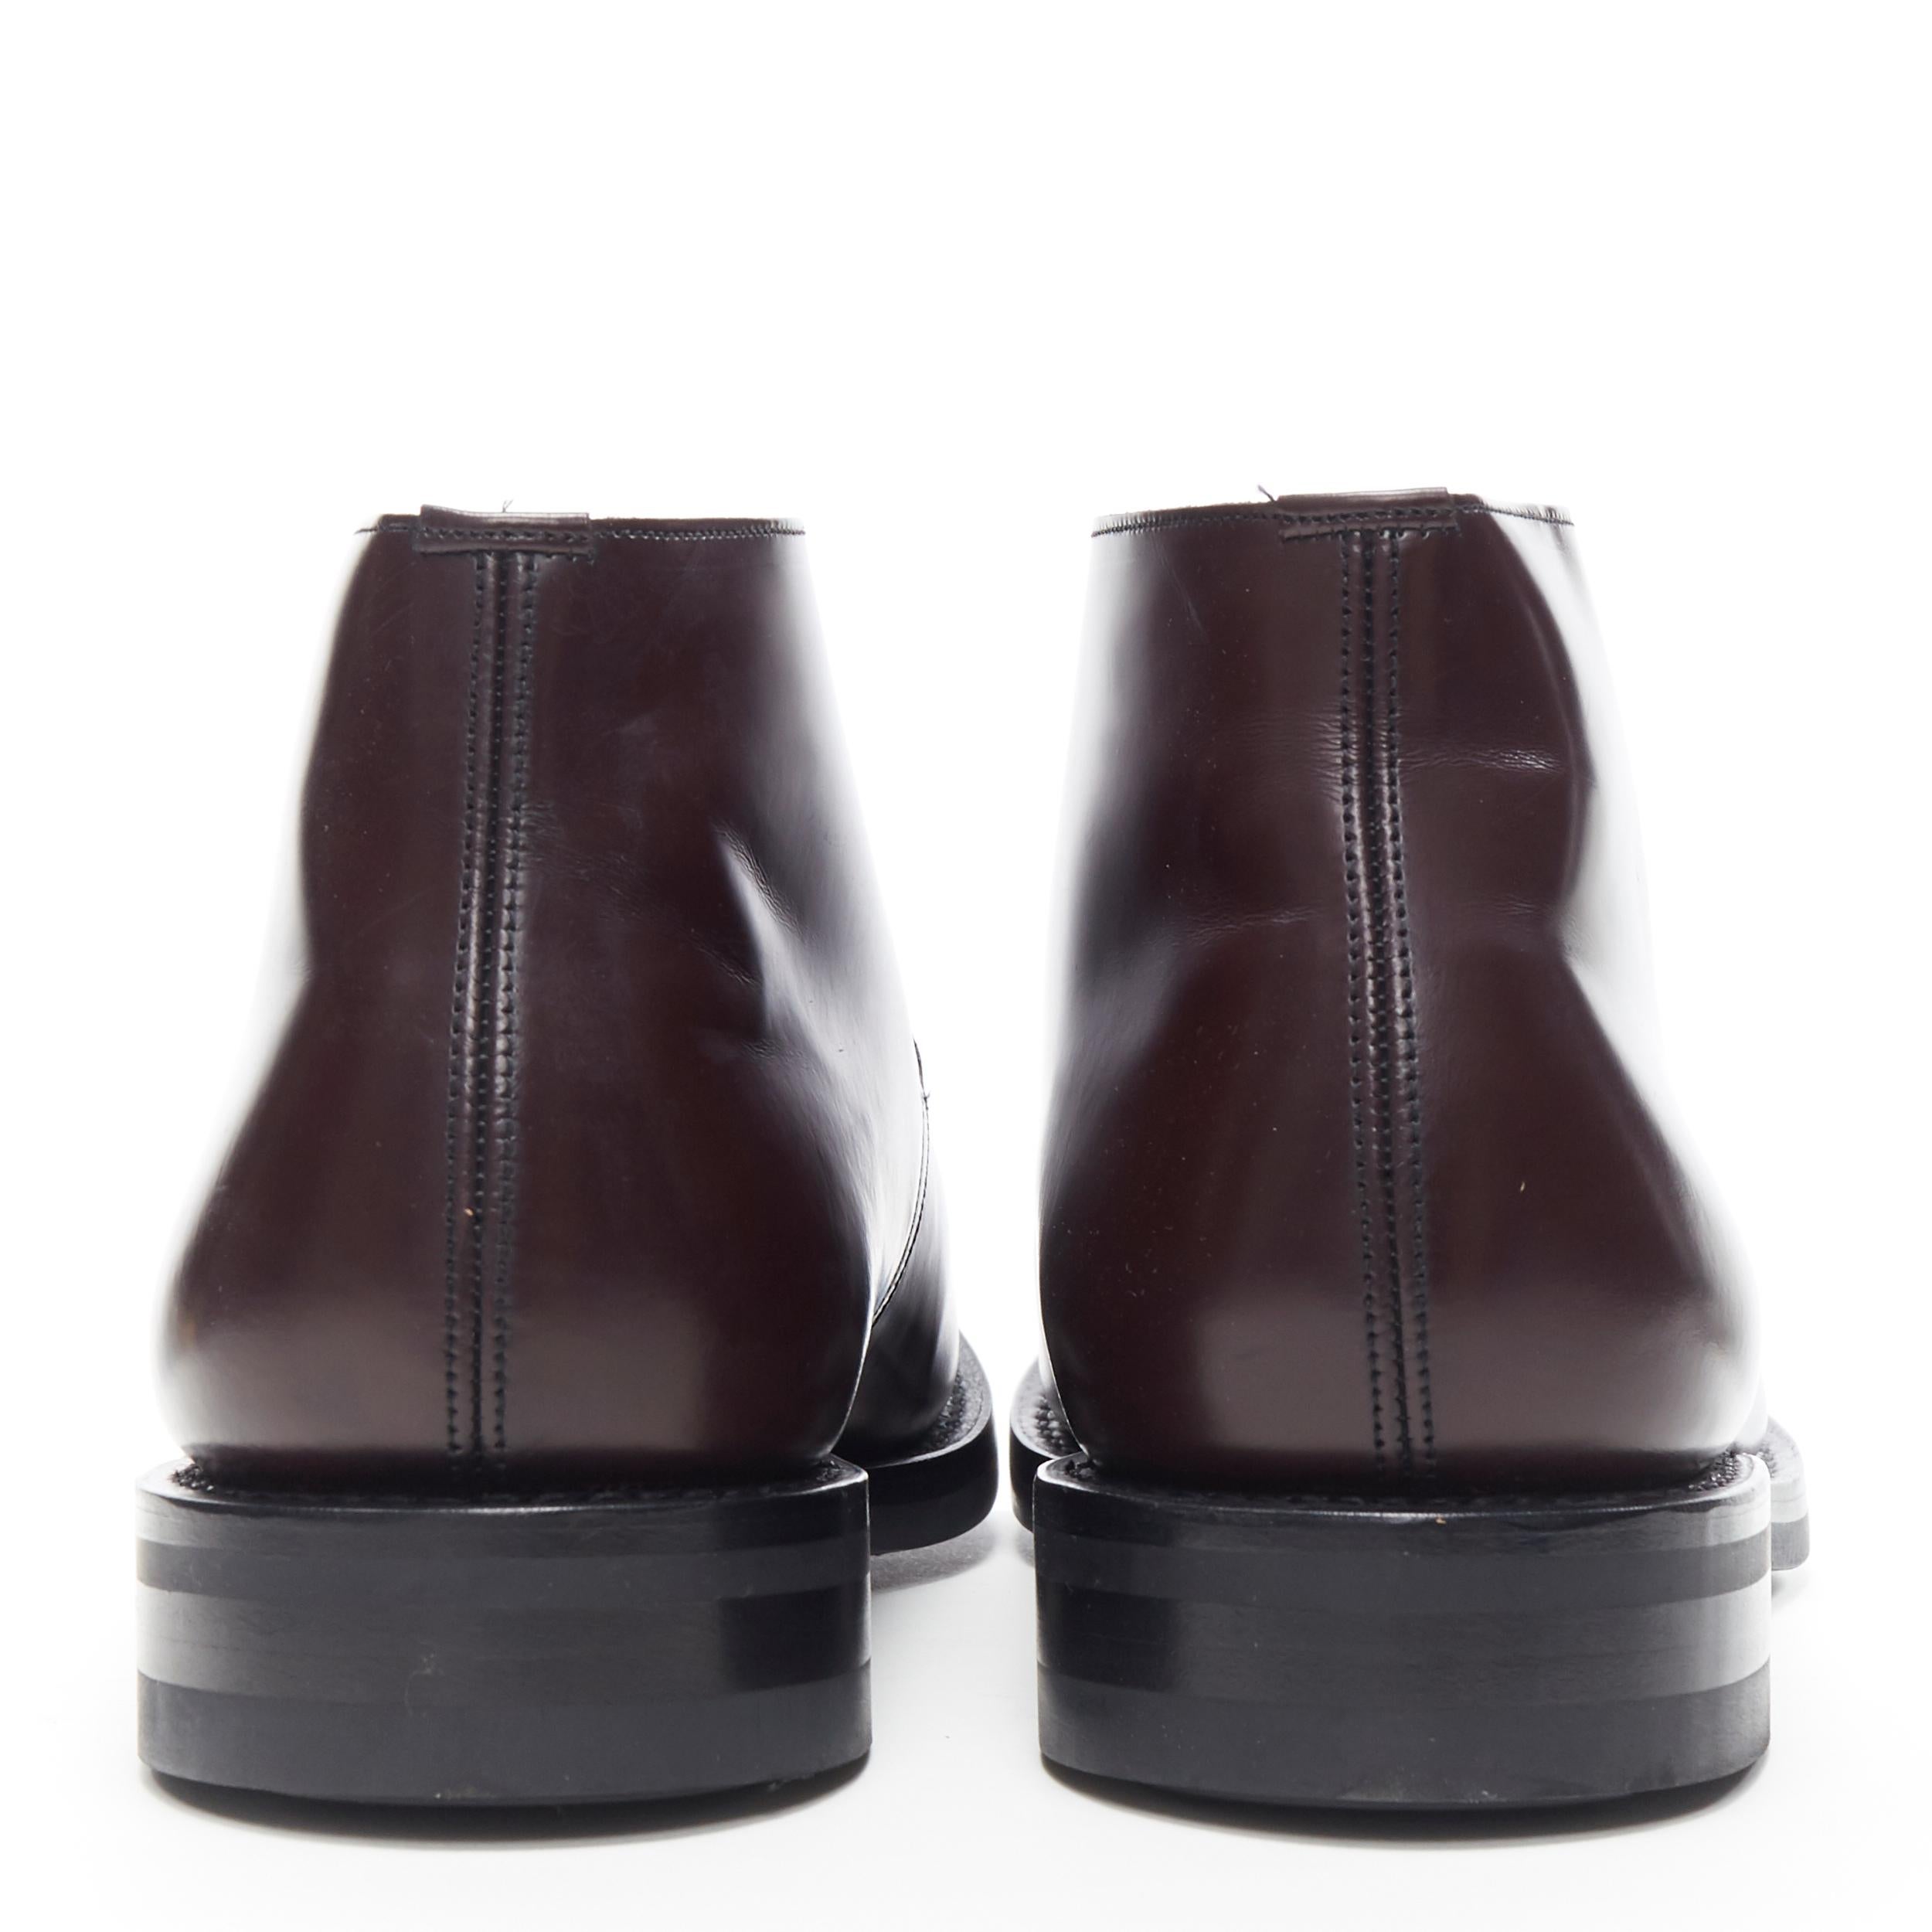 Men's new CHURCHS Ryder 3 Burgundy Bright Calf polished leather chukka boots UK11 EU45